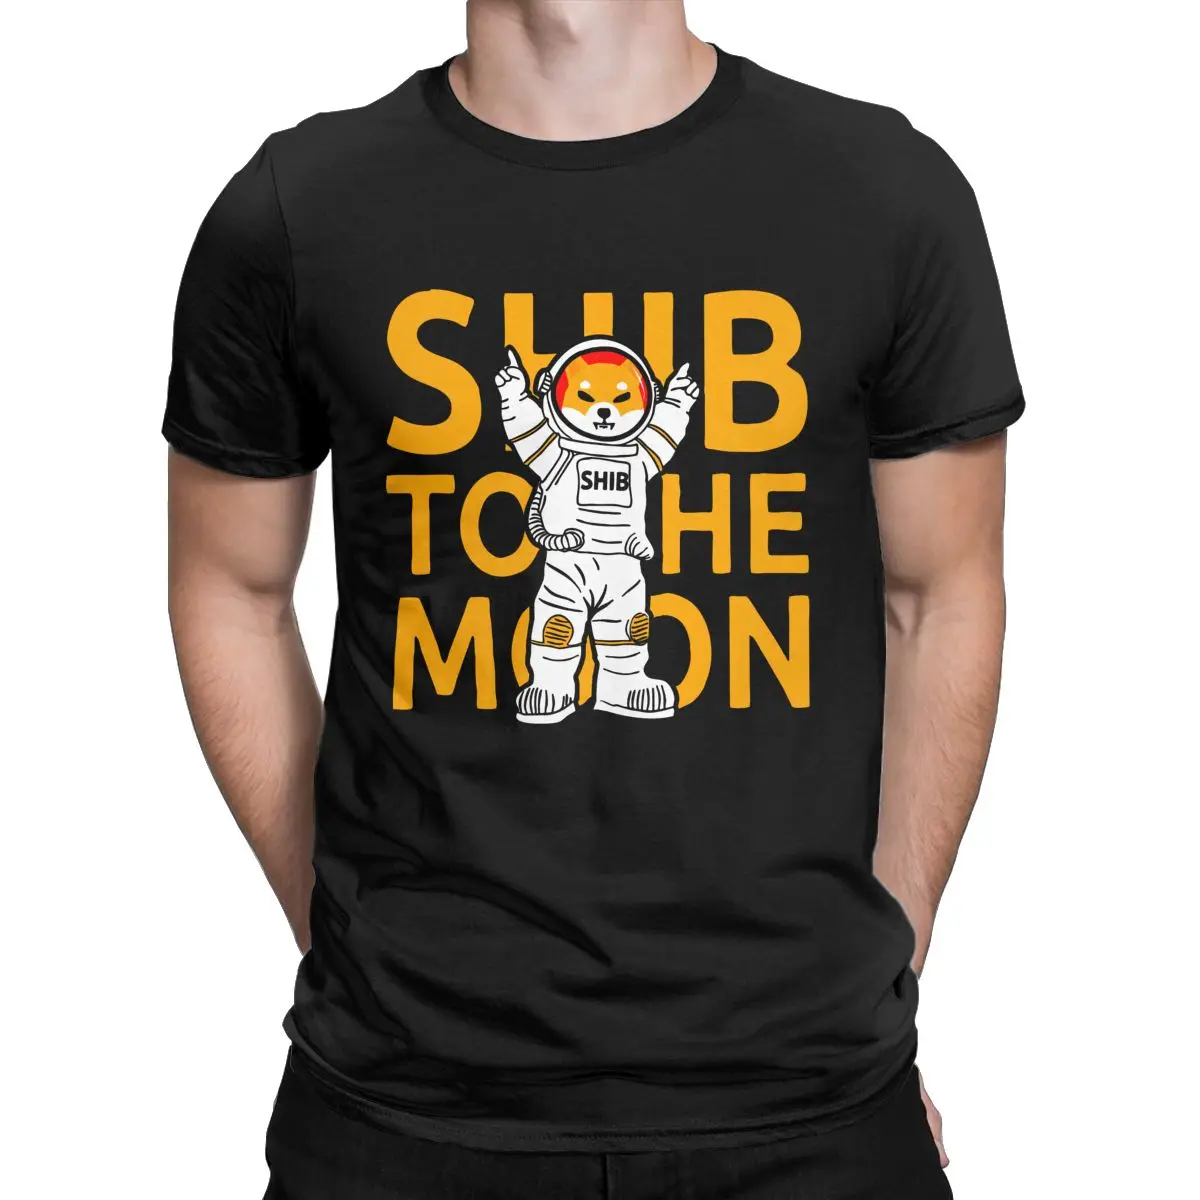 

Men's clothing Shib To The Moon Cotton Tops Humor Short Sleeve Crew Neck Tees Gift Idea T-Shirt